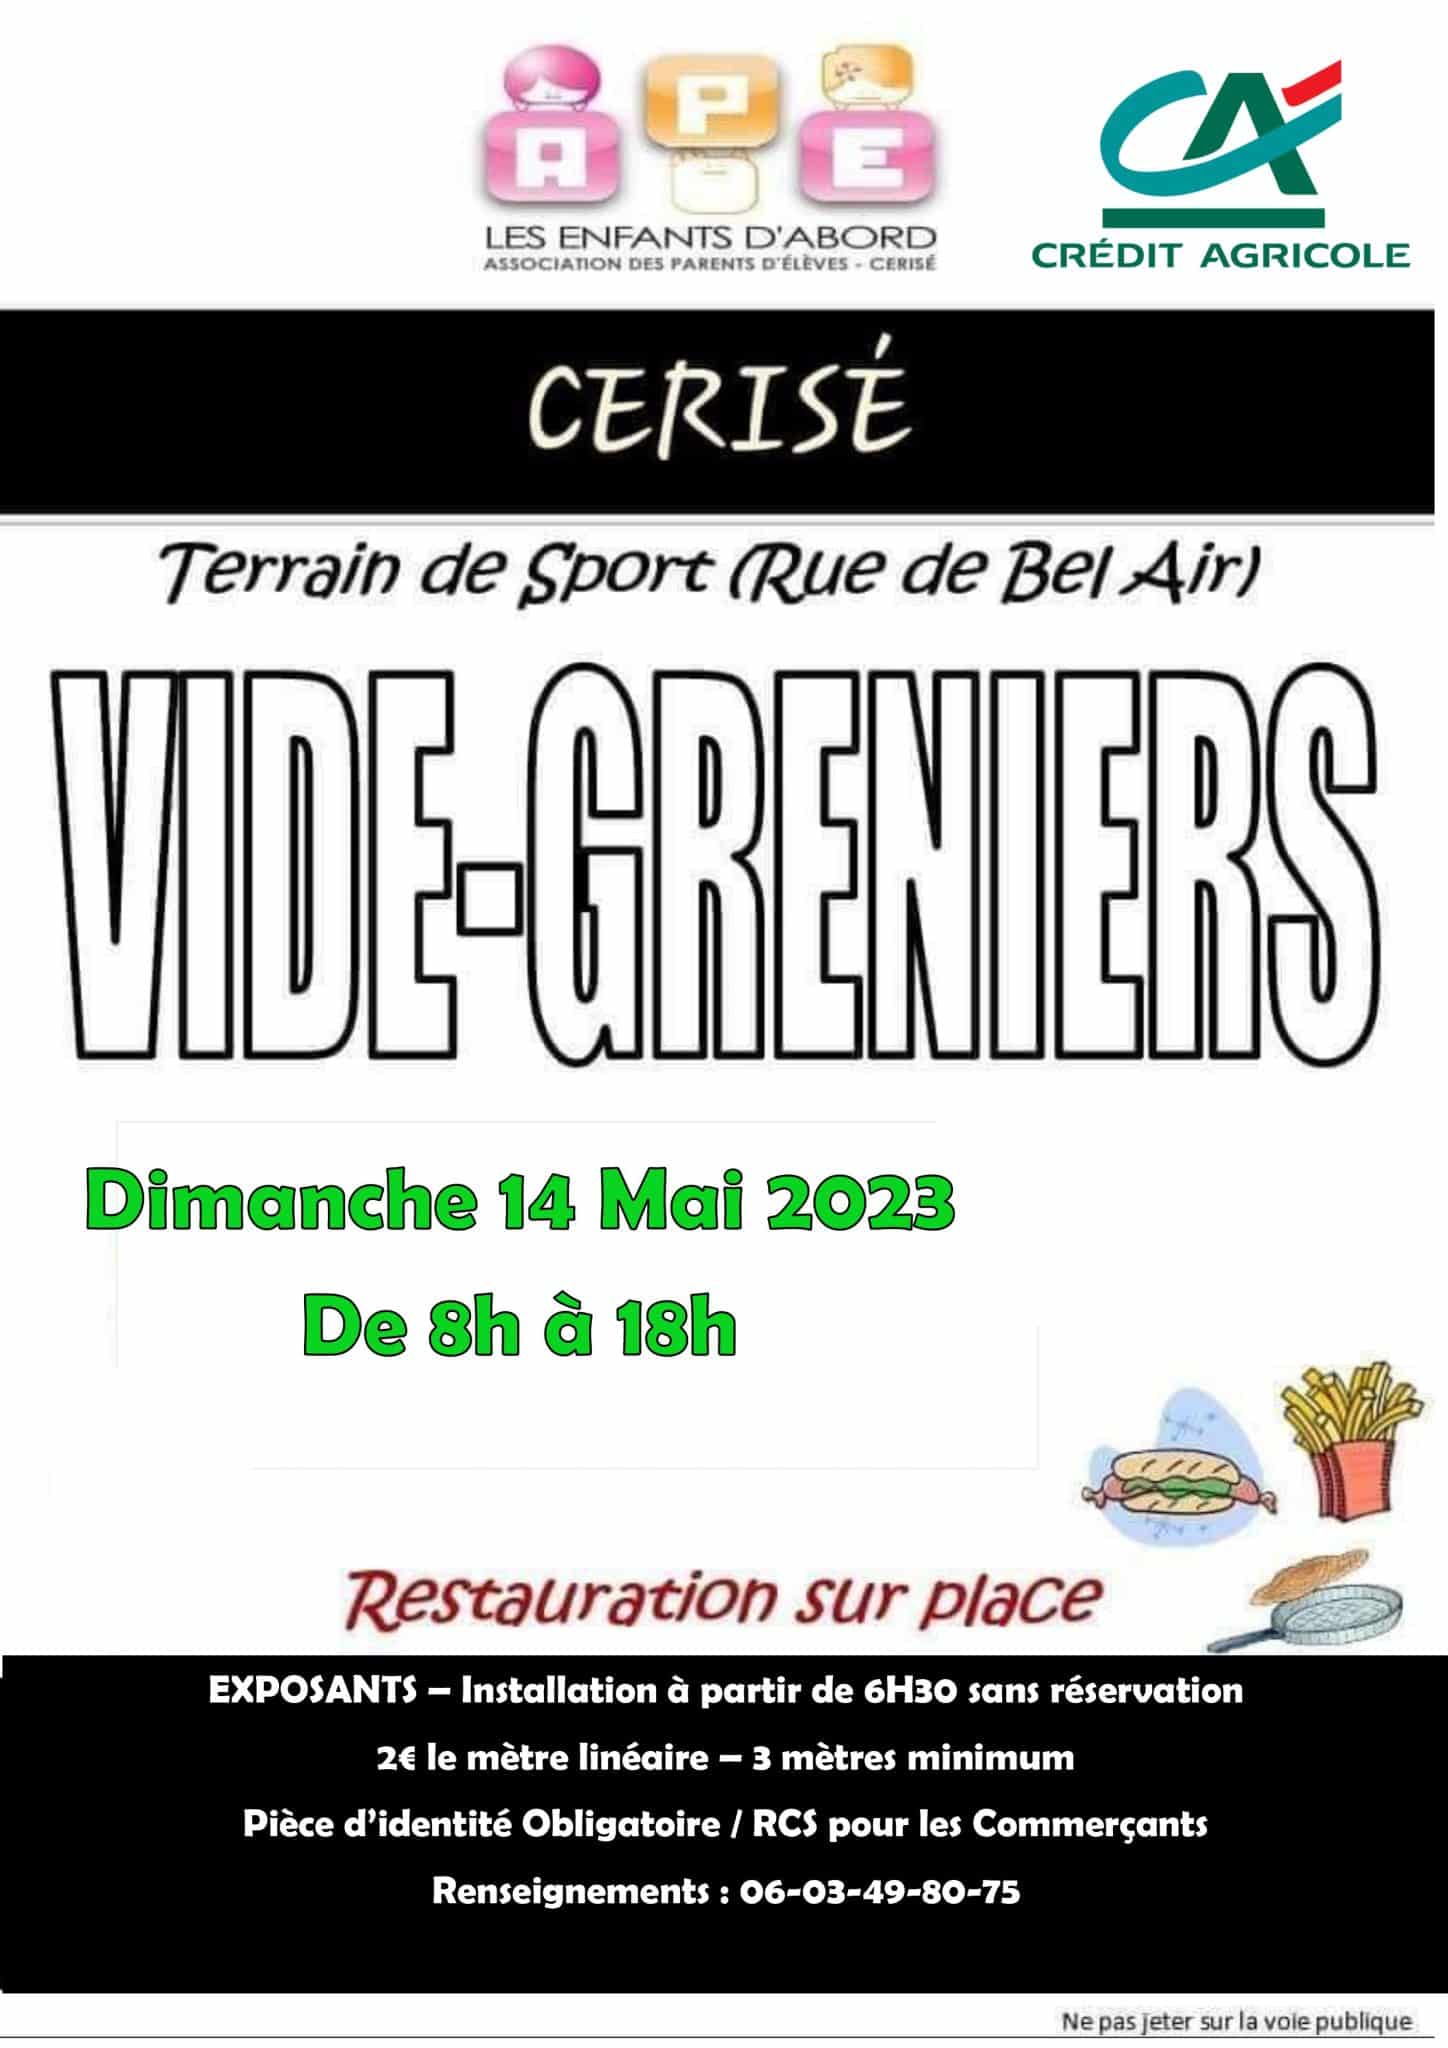 Vide-greniers/Dimanche 14 mai 2023 de 8h à 18h/Terrain de sport/Cerisé